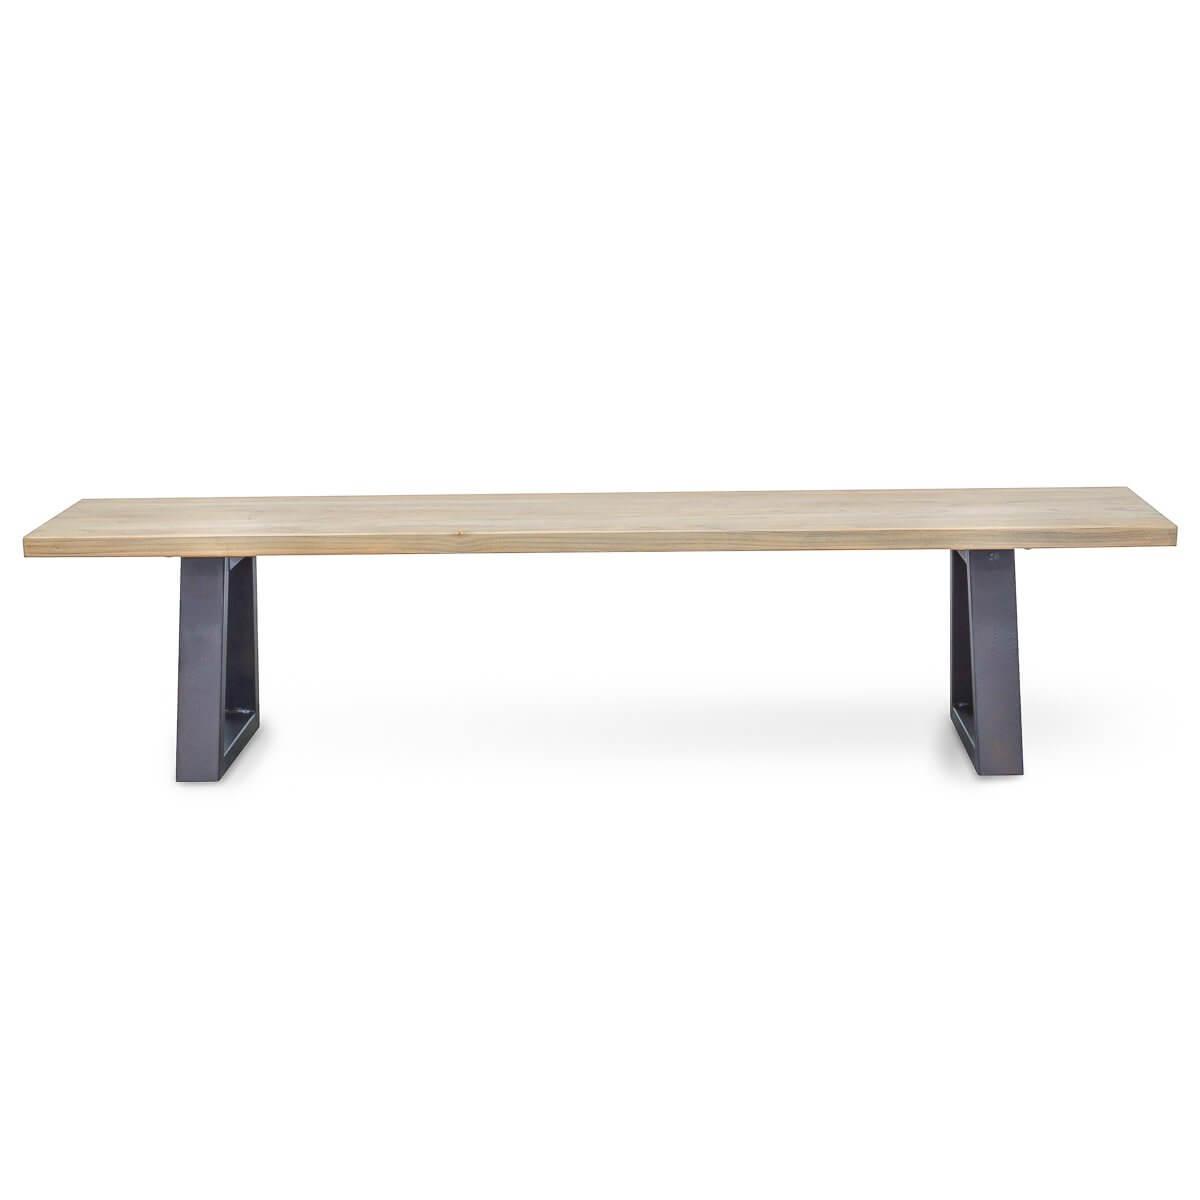 Calibre 2m Reclaimed Elm Wood Bench - Natural DT055-Wood Bench-Calibre-Prime Furniture